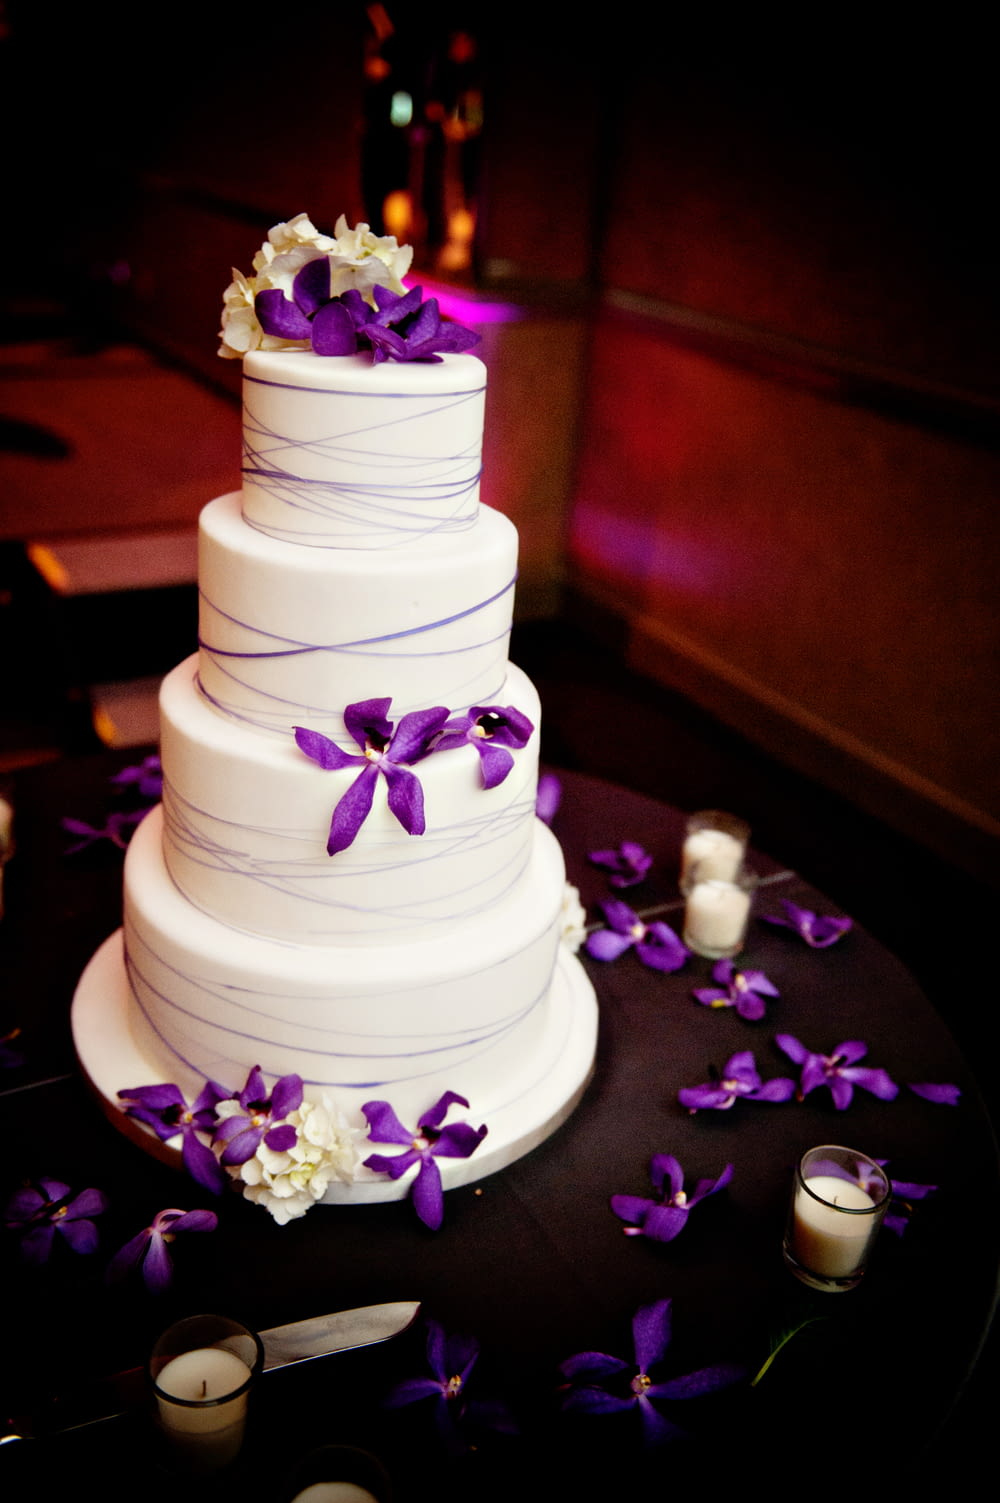 white 3 tier cake with purple flowers